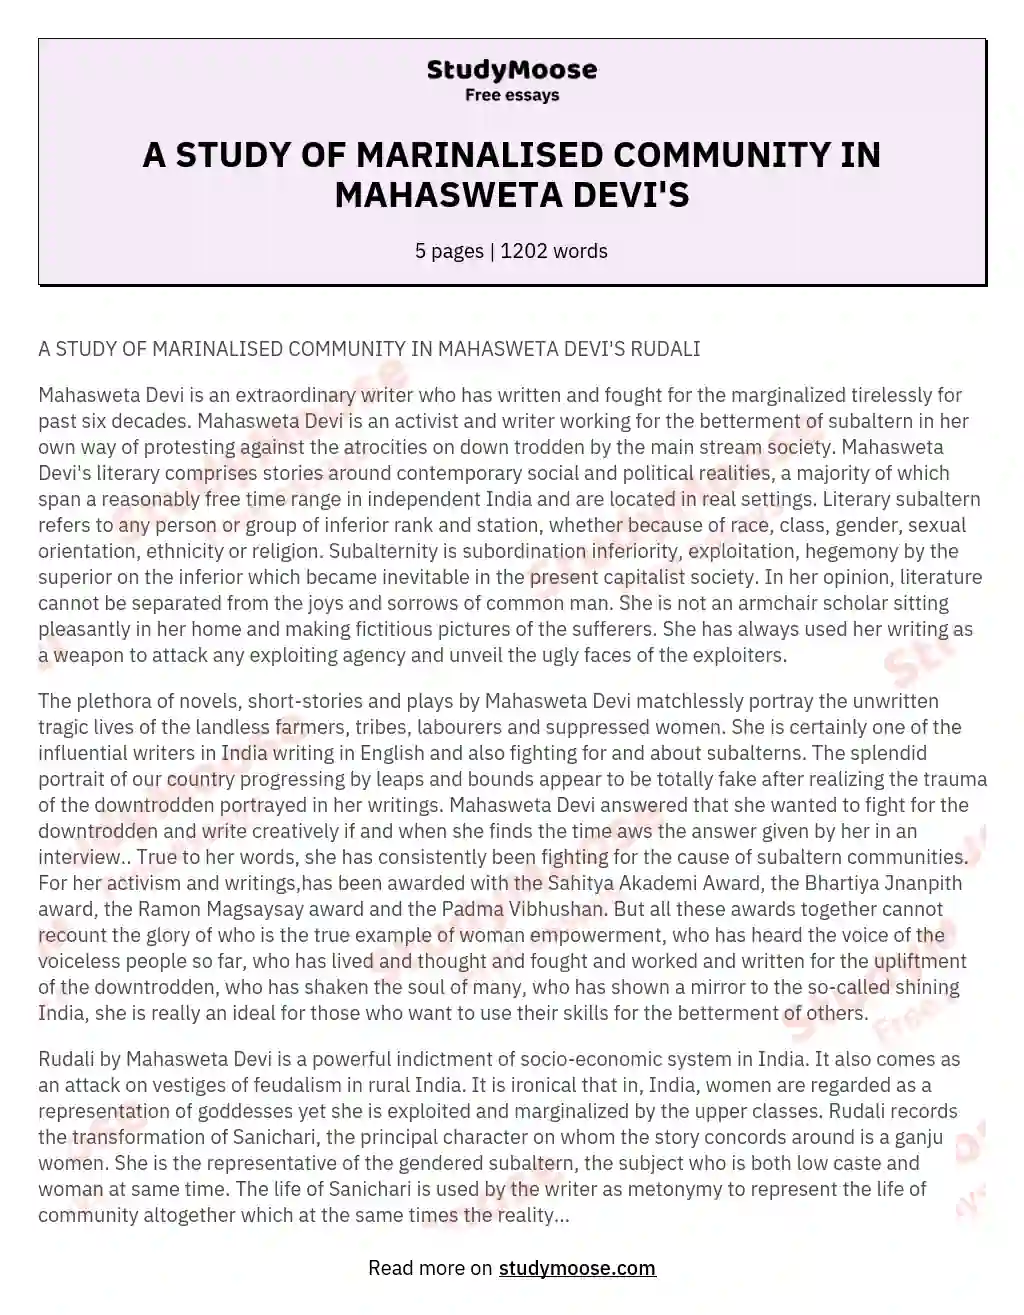 A STUDY OF MARINALISED COMMUNITY IN MAHASWETA DEVI'S essay